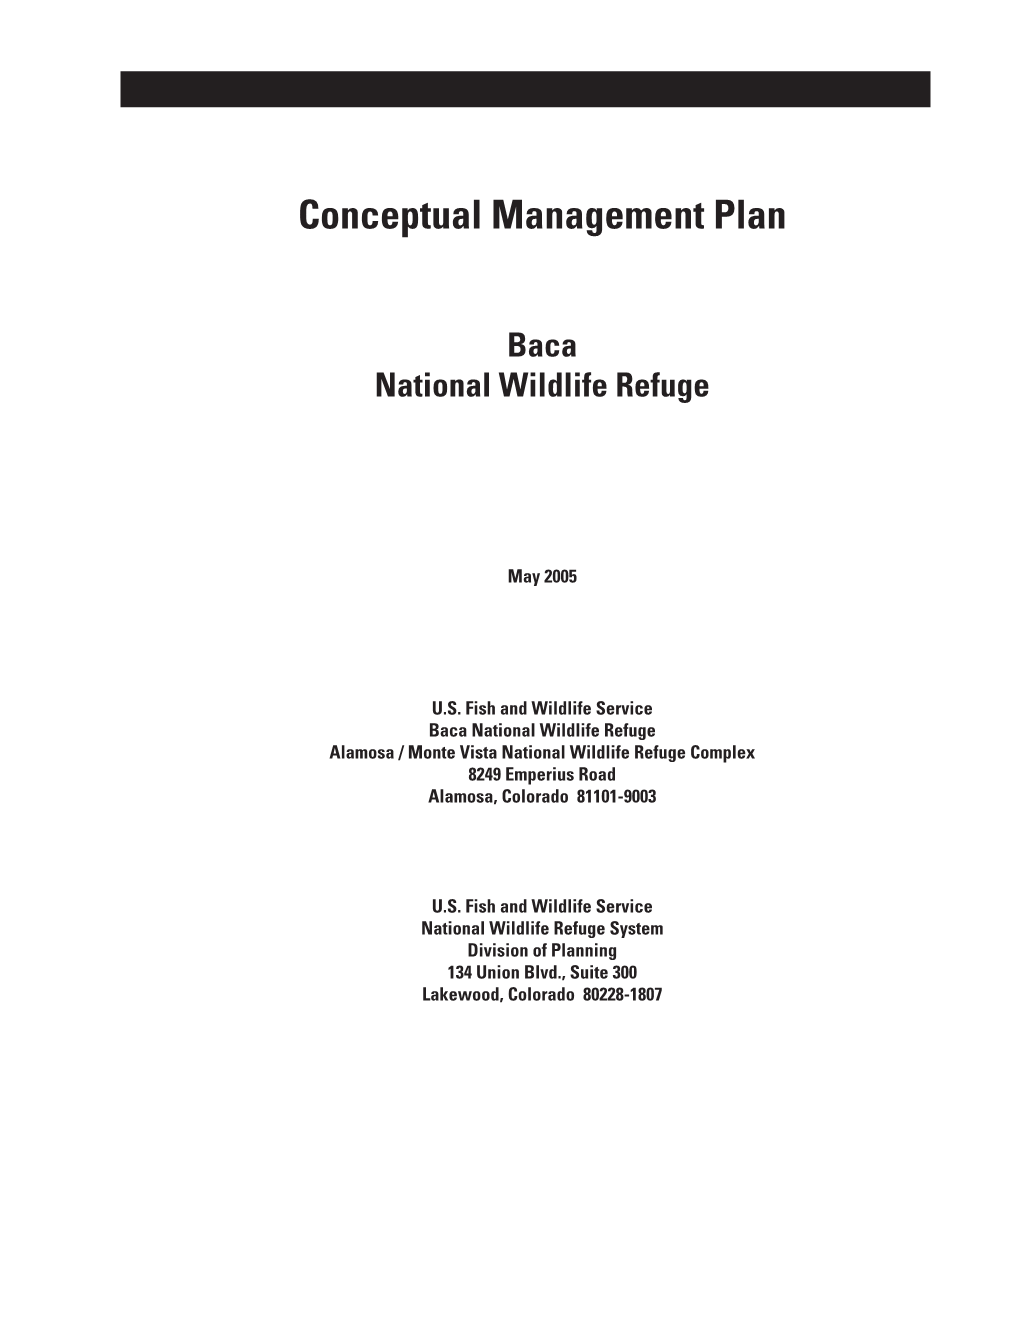 Baca National Wildlife Refuge, Conceptual Management Plan